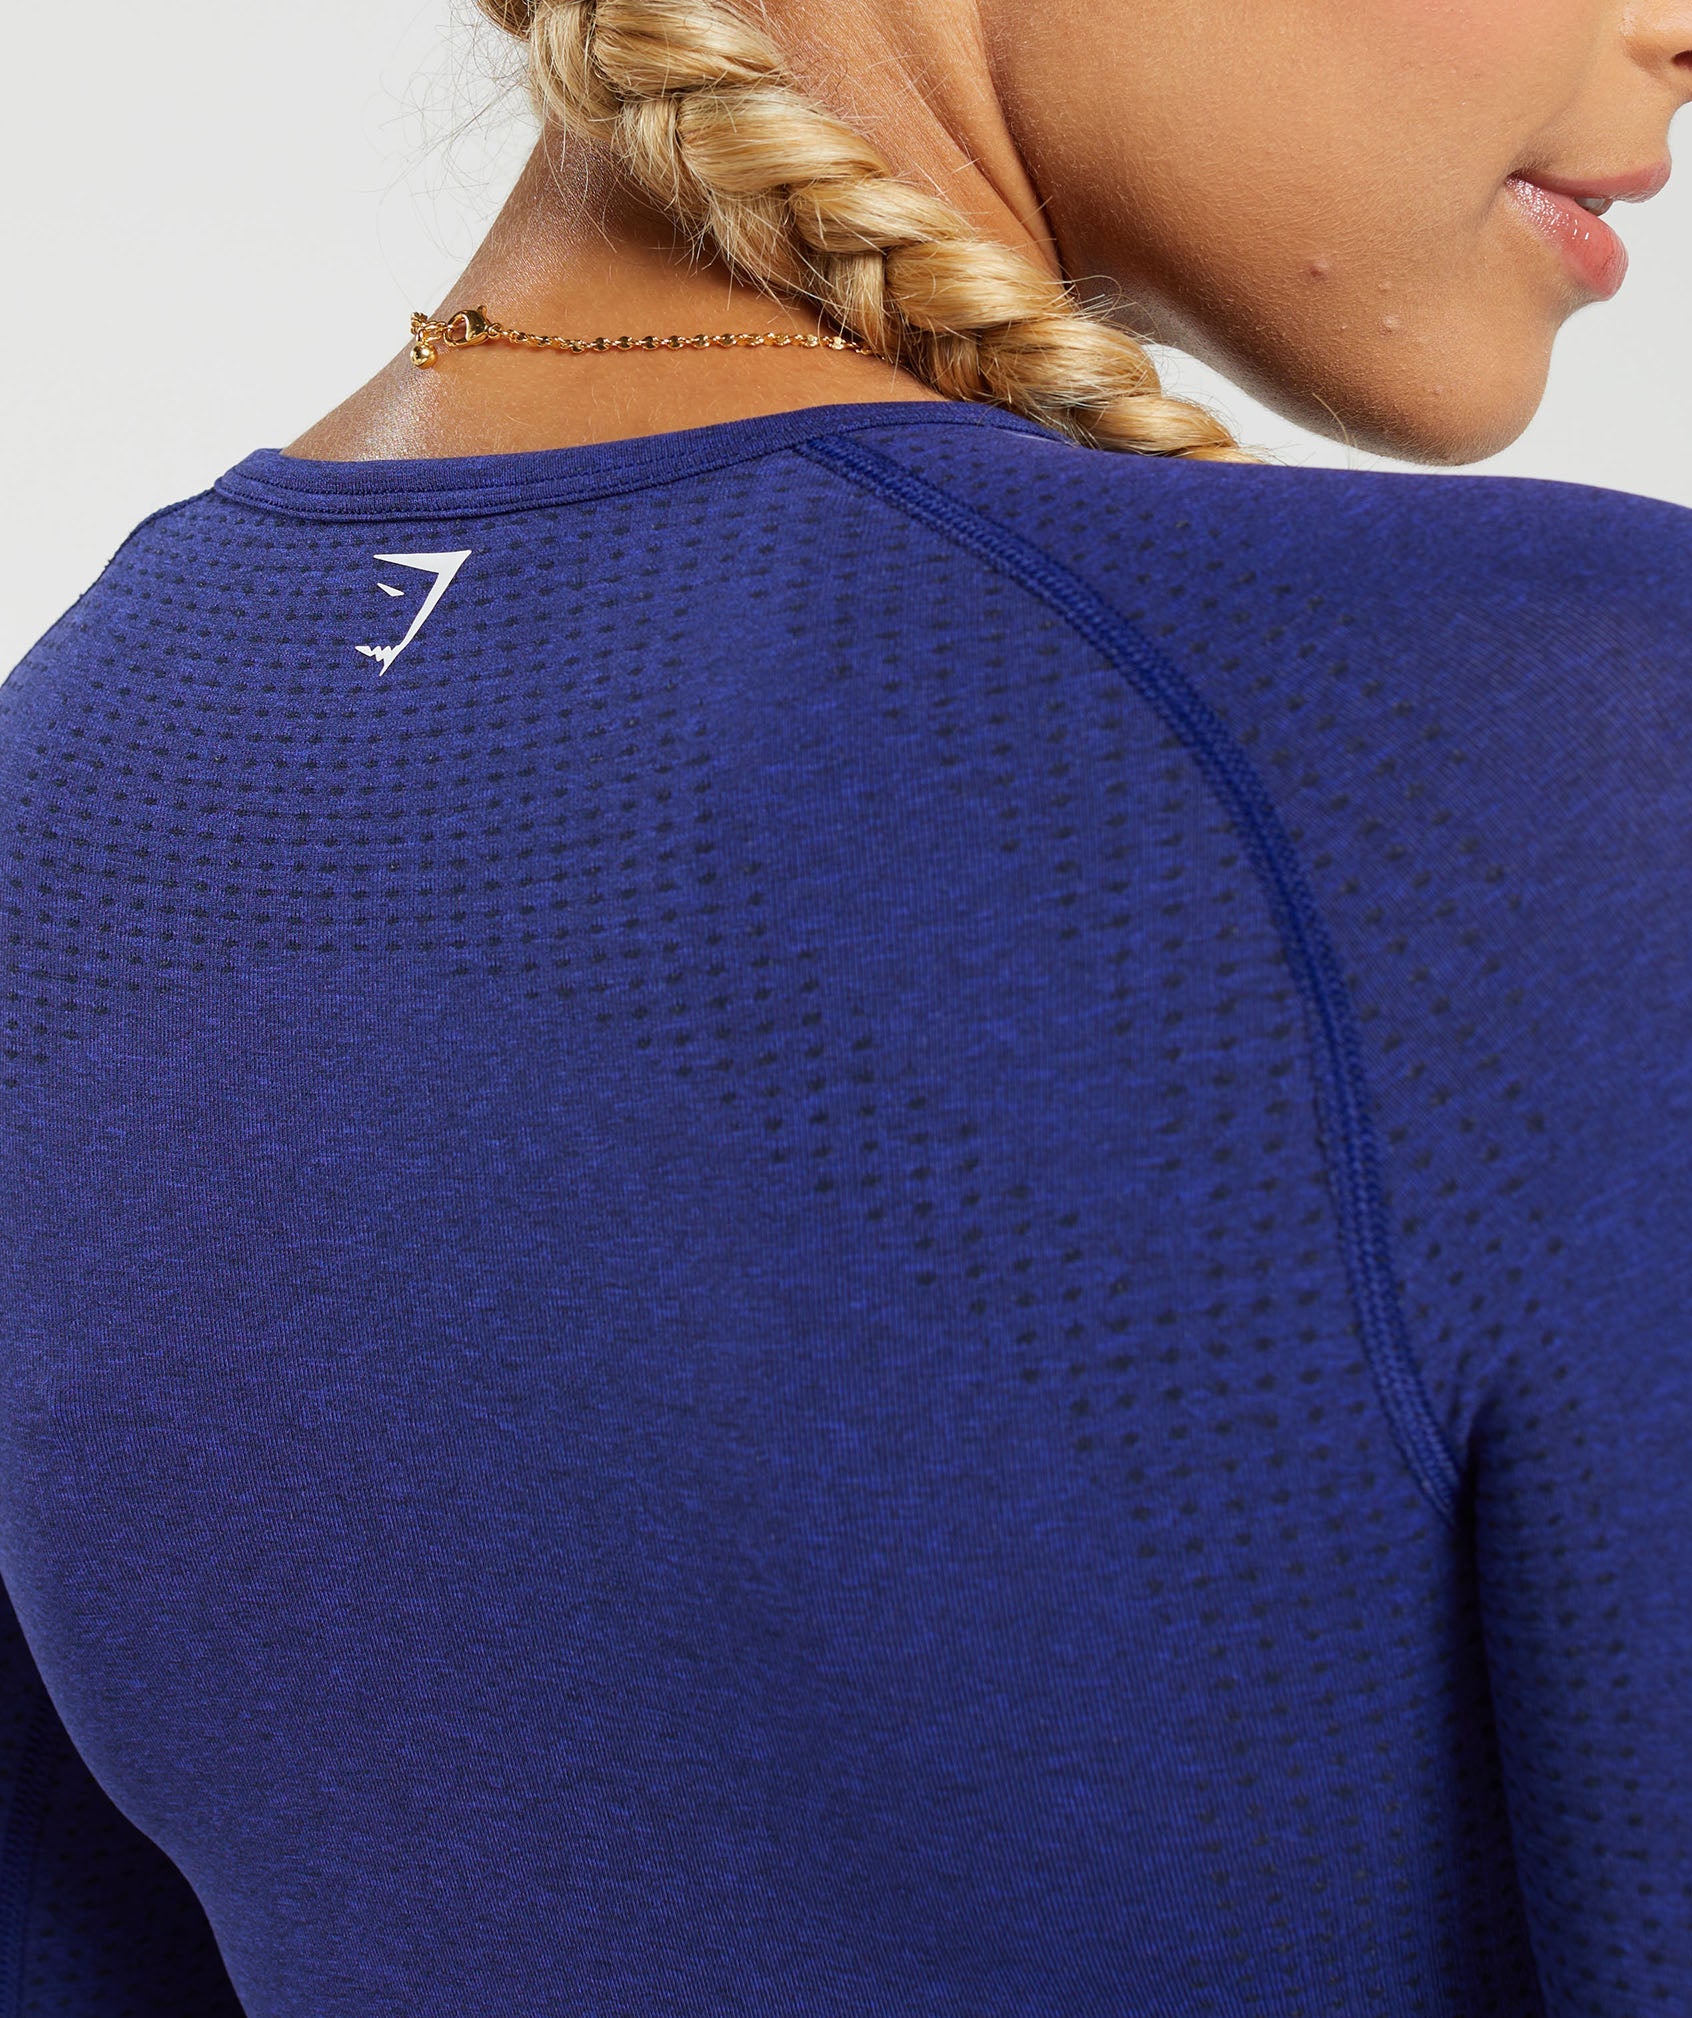 NWT Gymshark Woman's Turbo Seamless Crop Top& Leggings Set Cobalt Blue Sz M